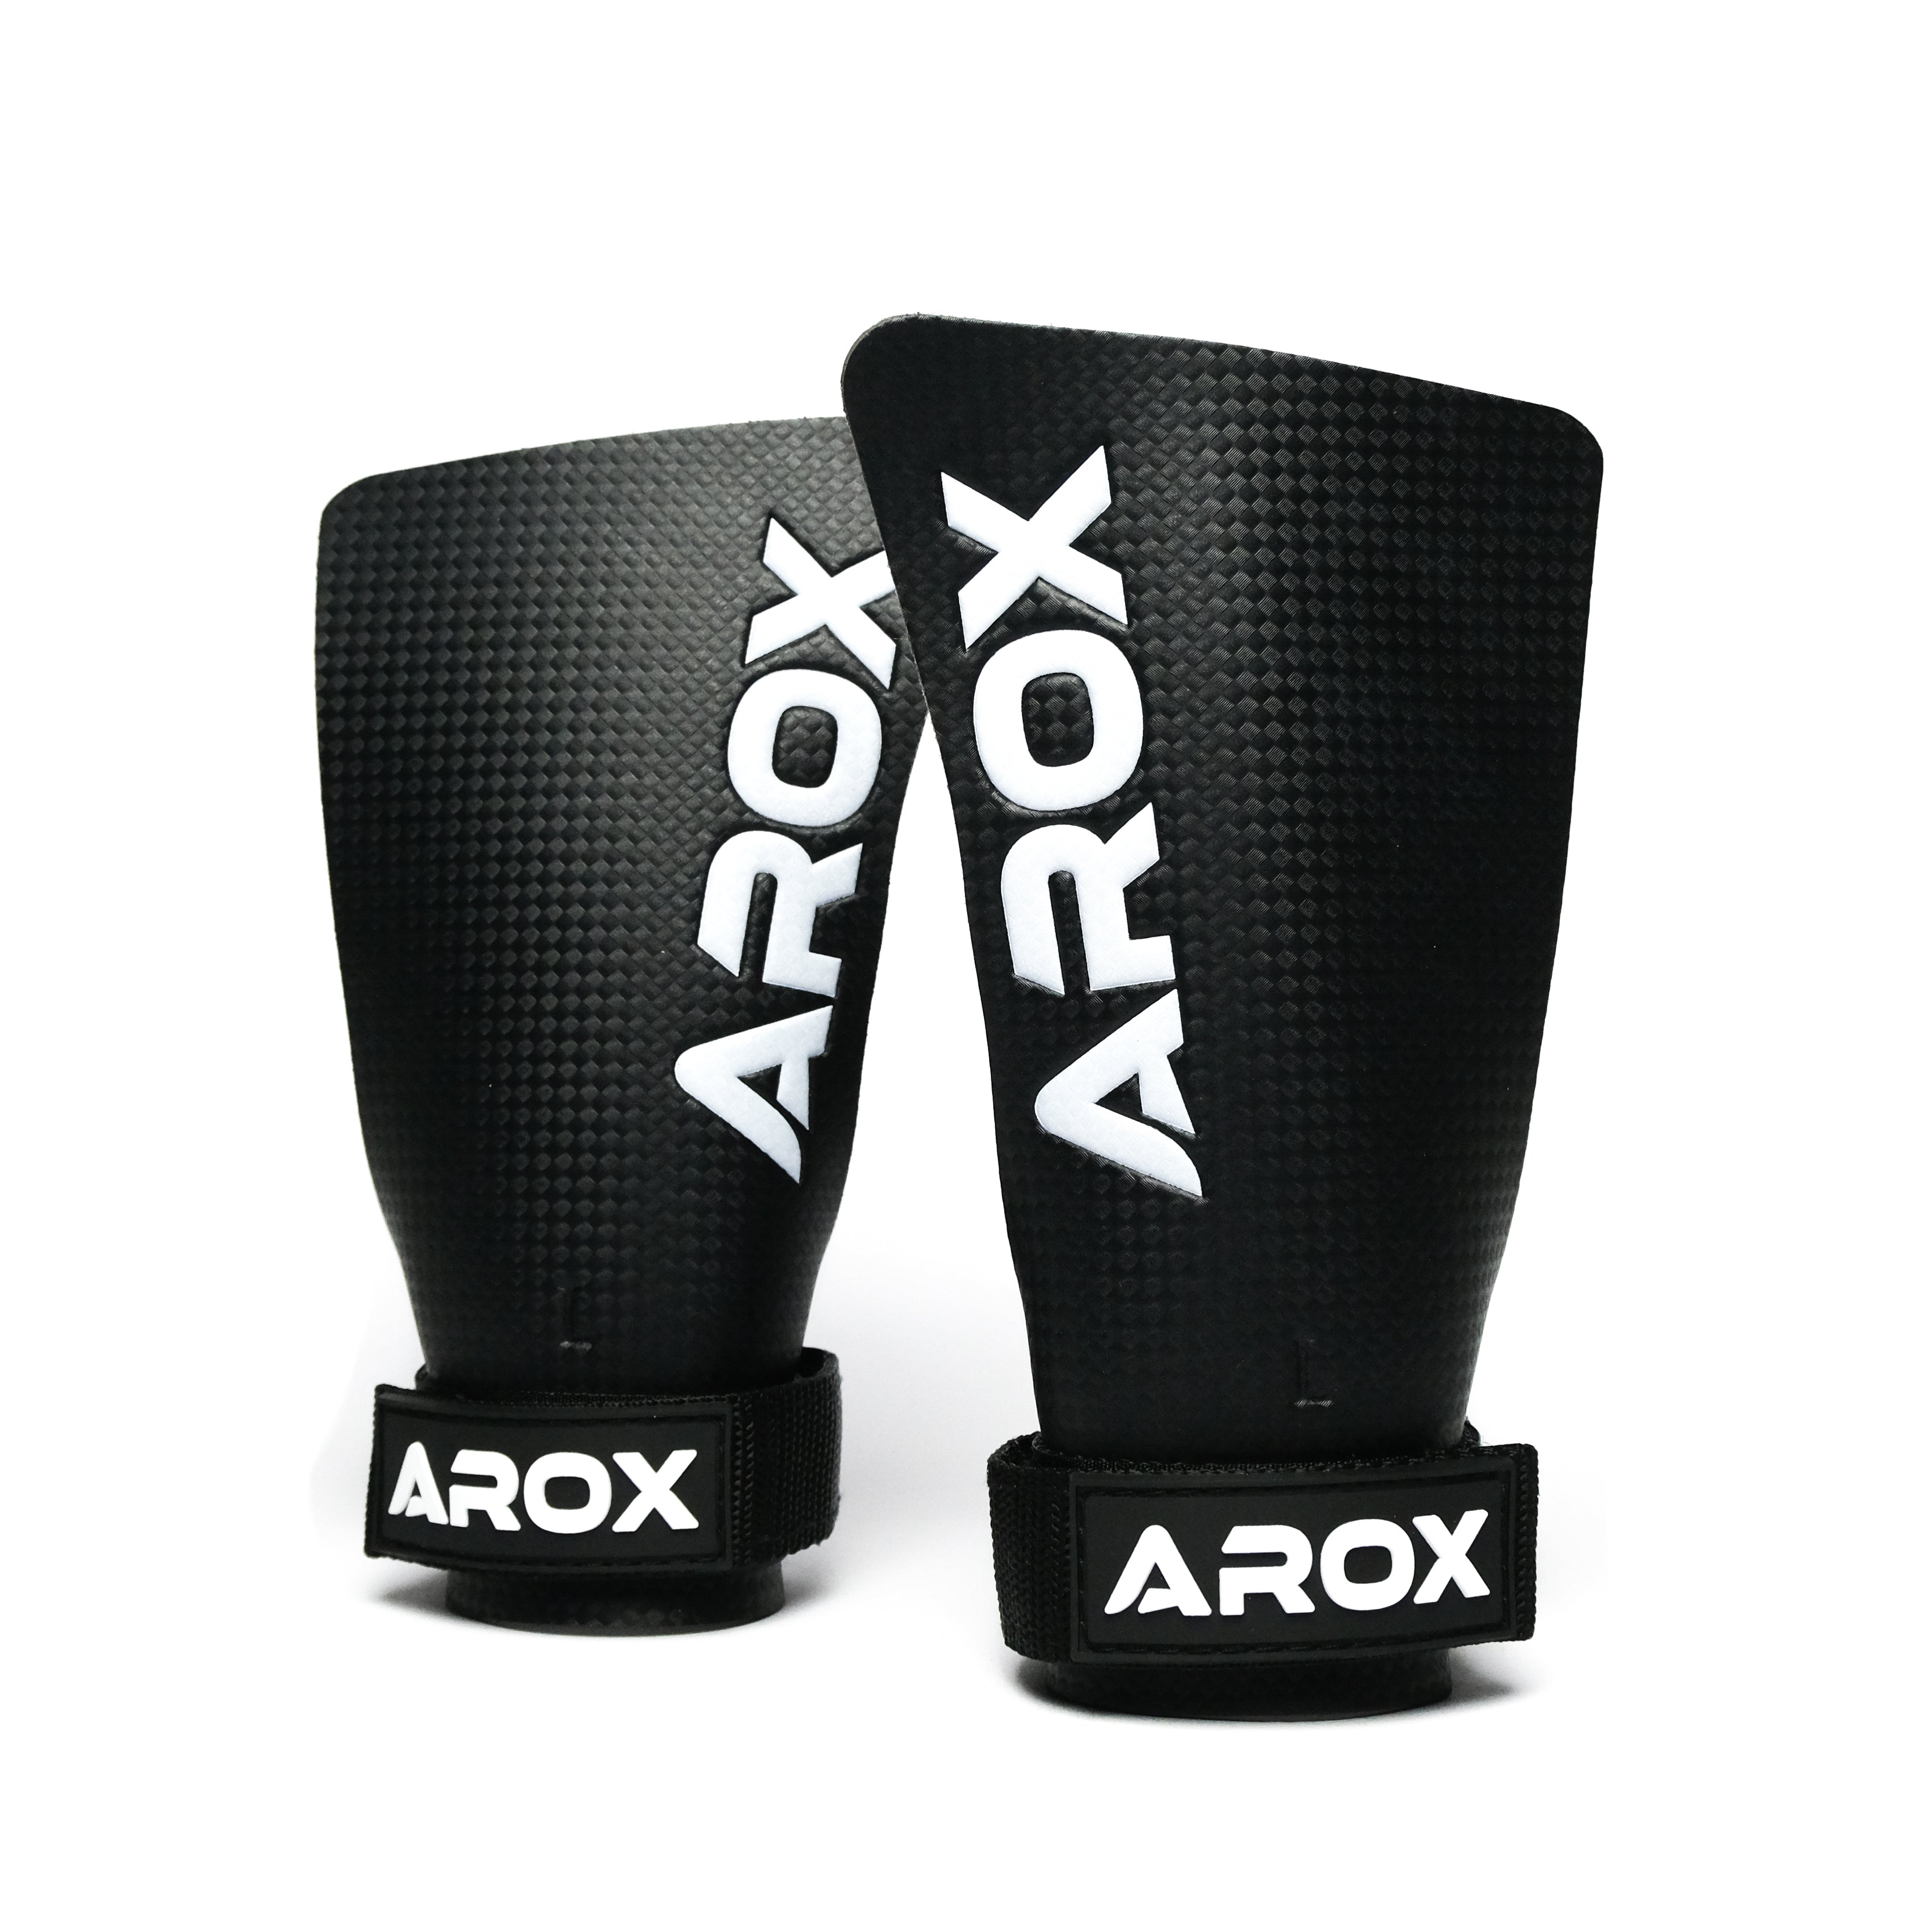 Arox - Wolverine Carbon grips 